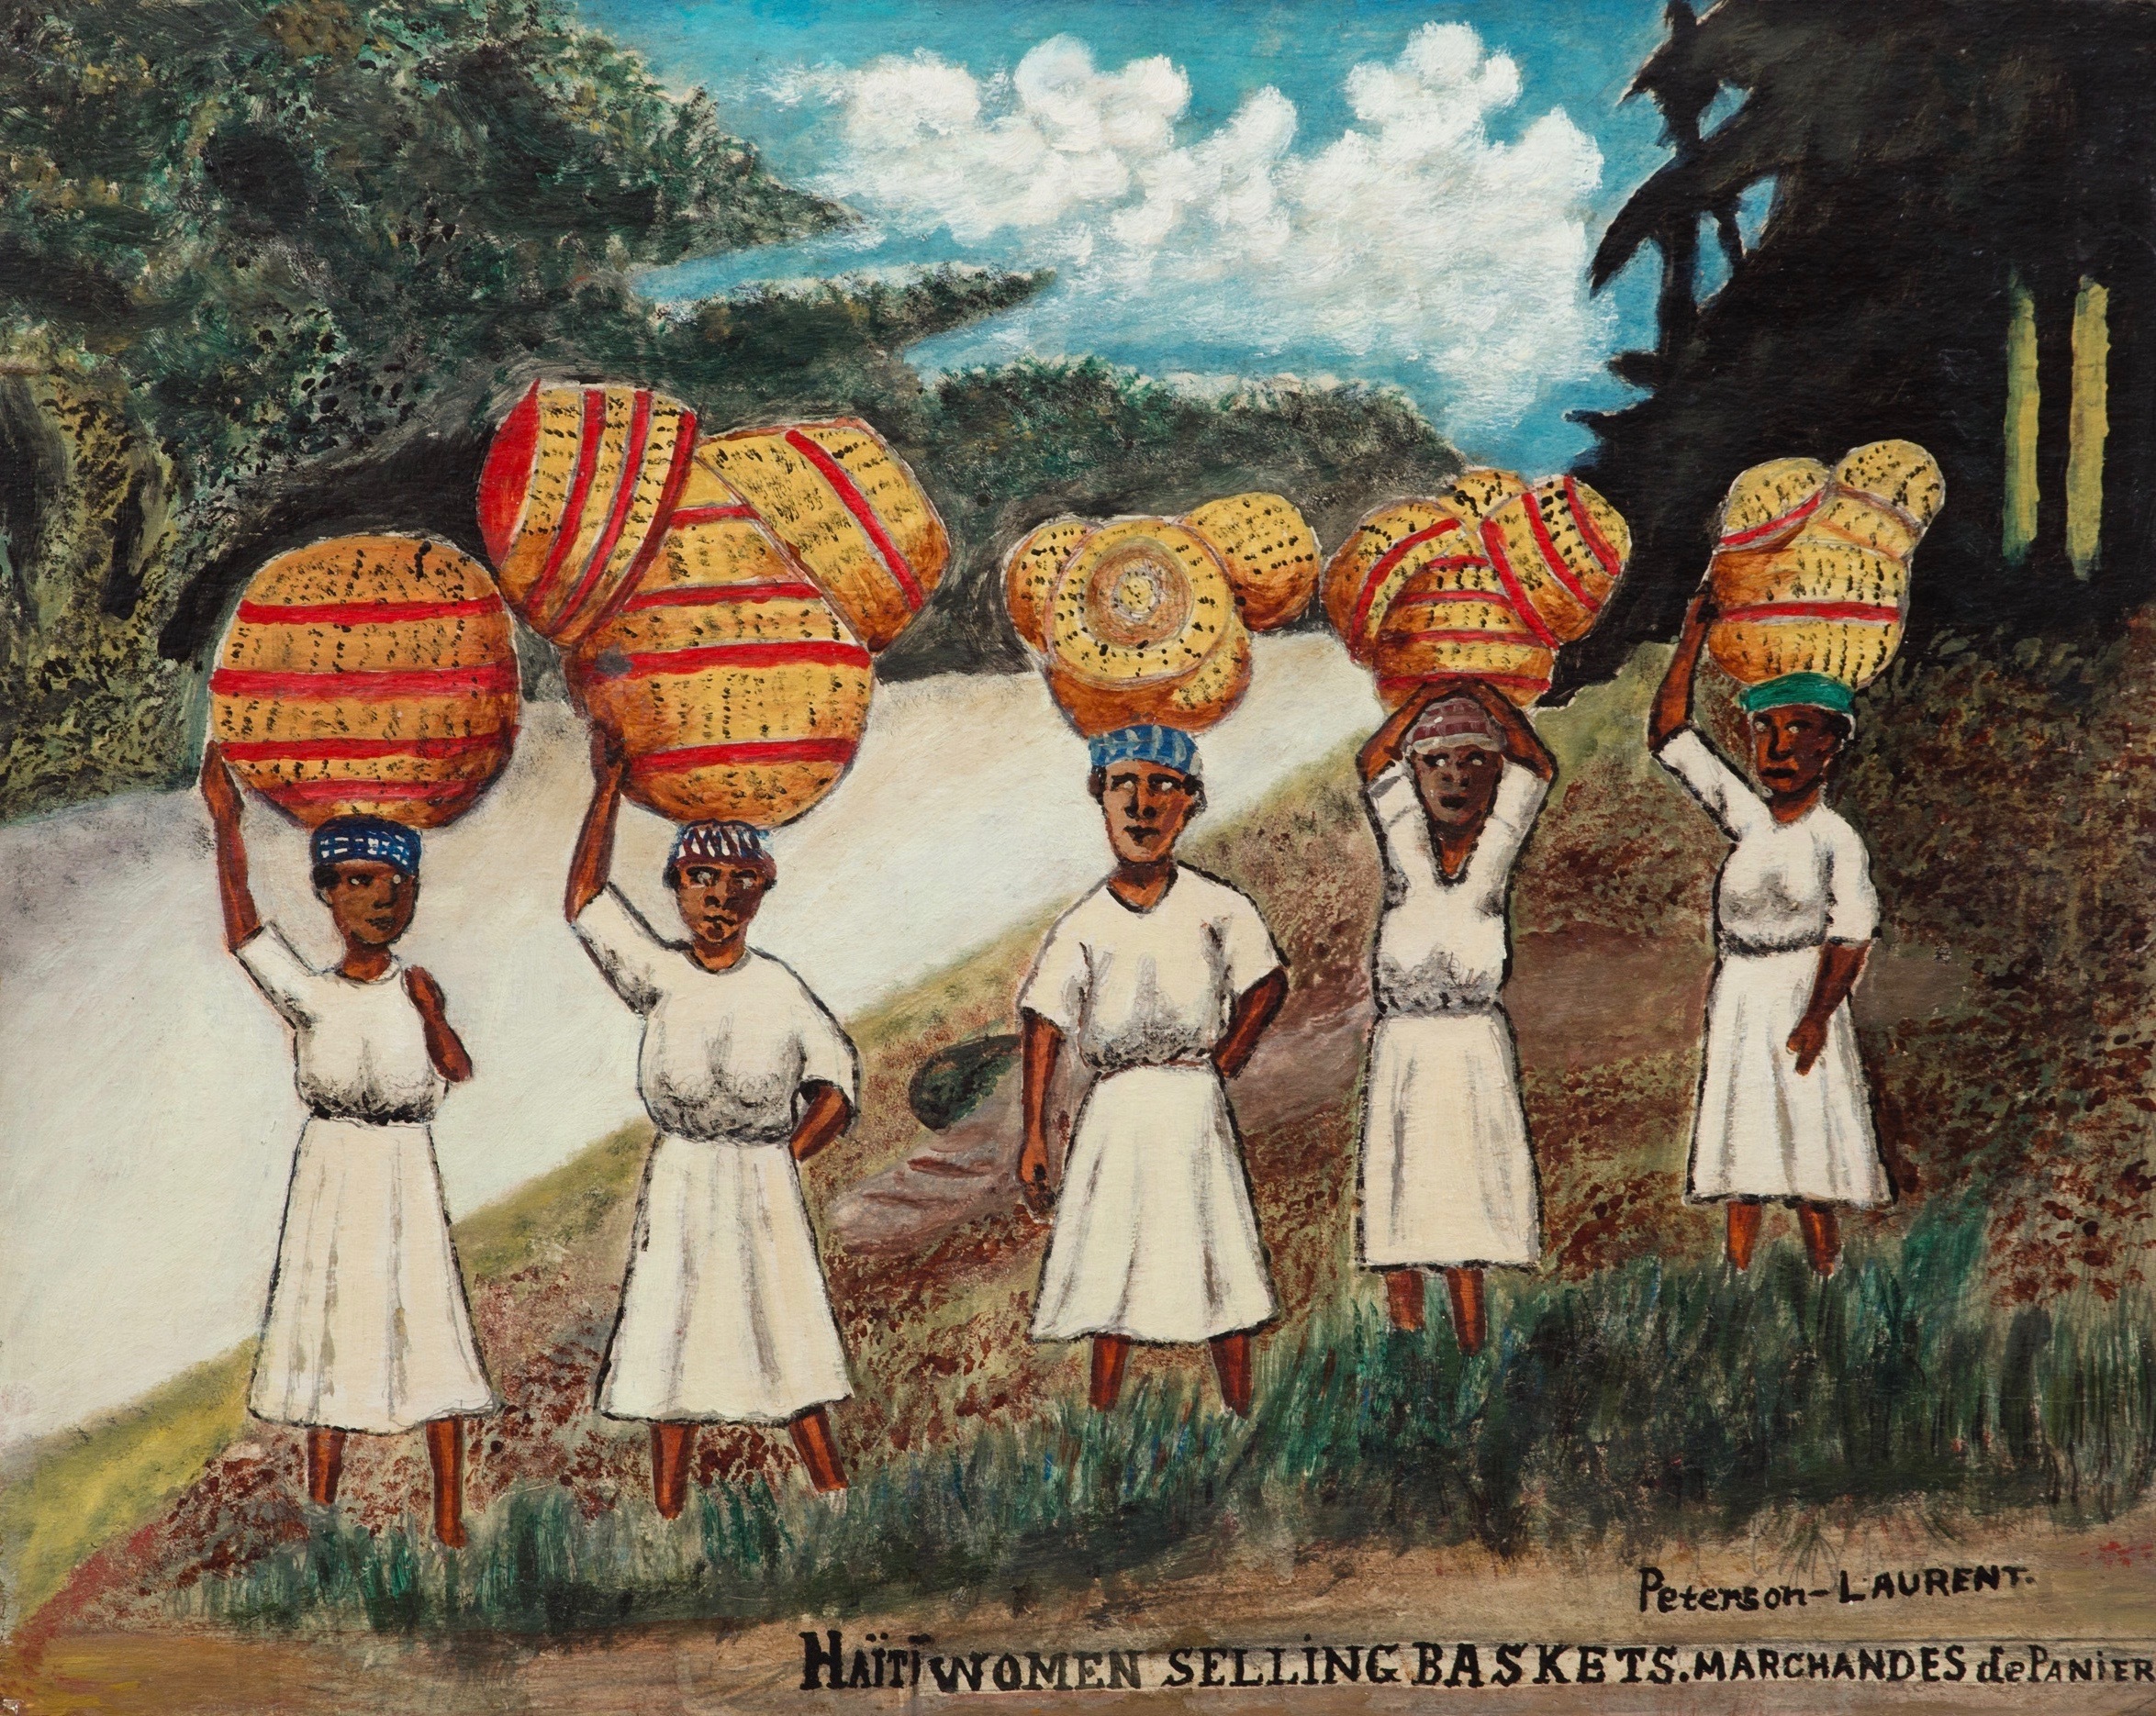 Haiti Women Selling Baskets (Marchandes de Panier)